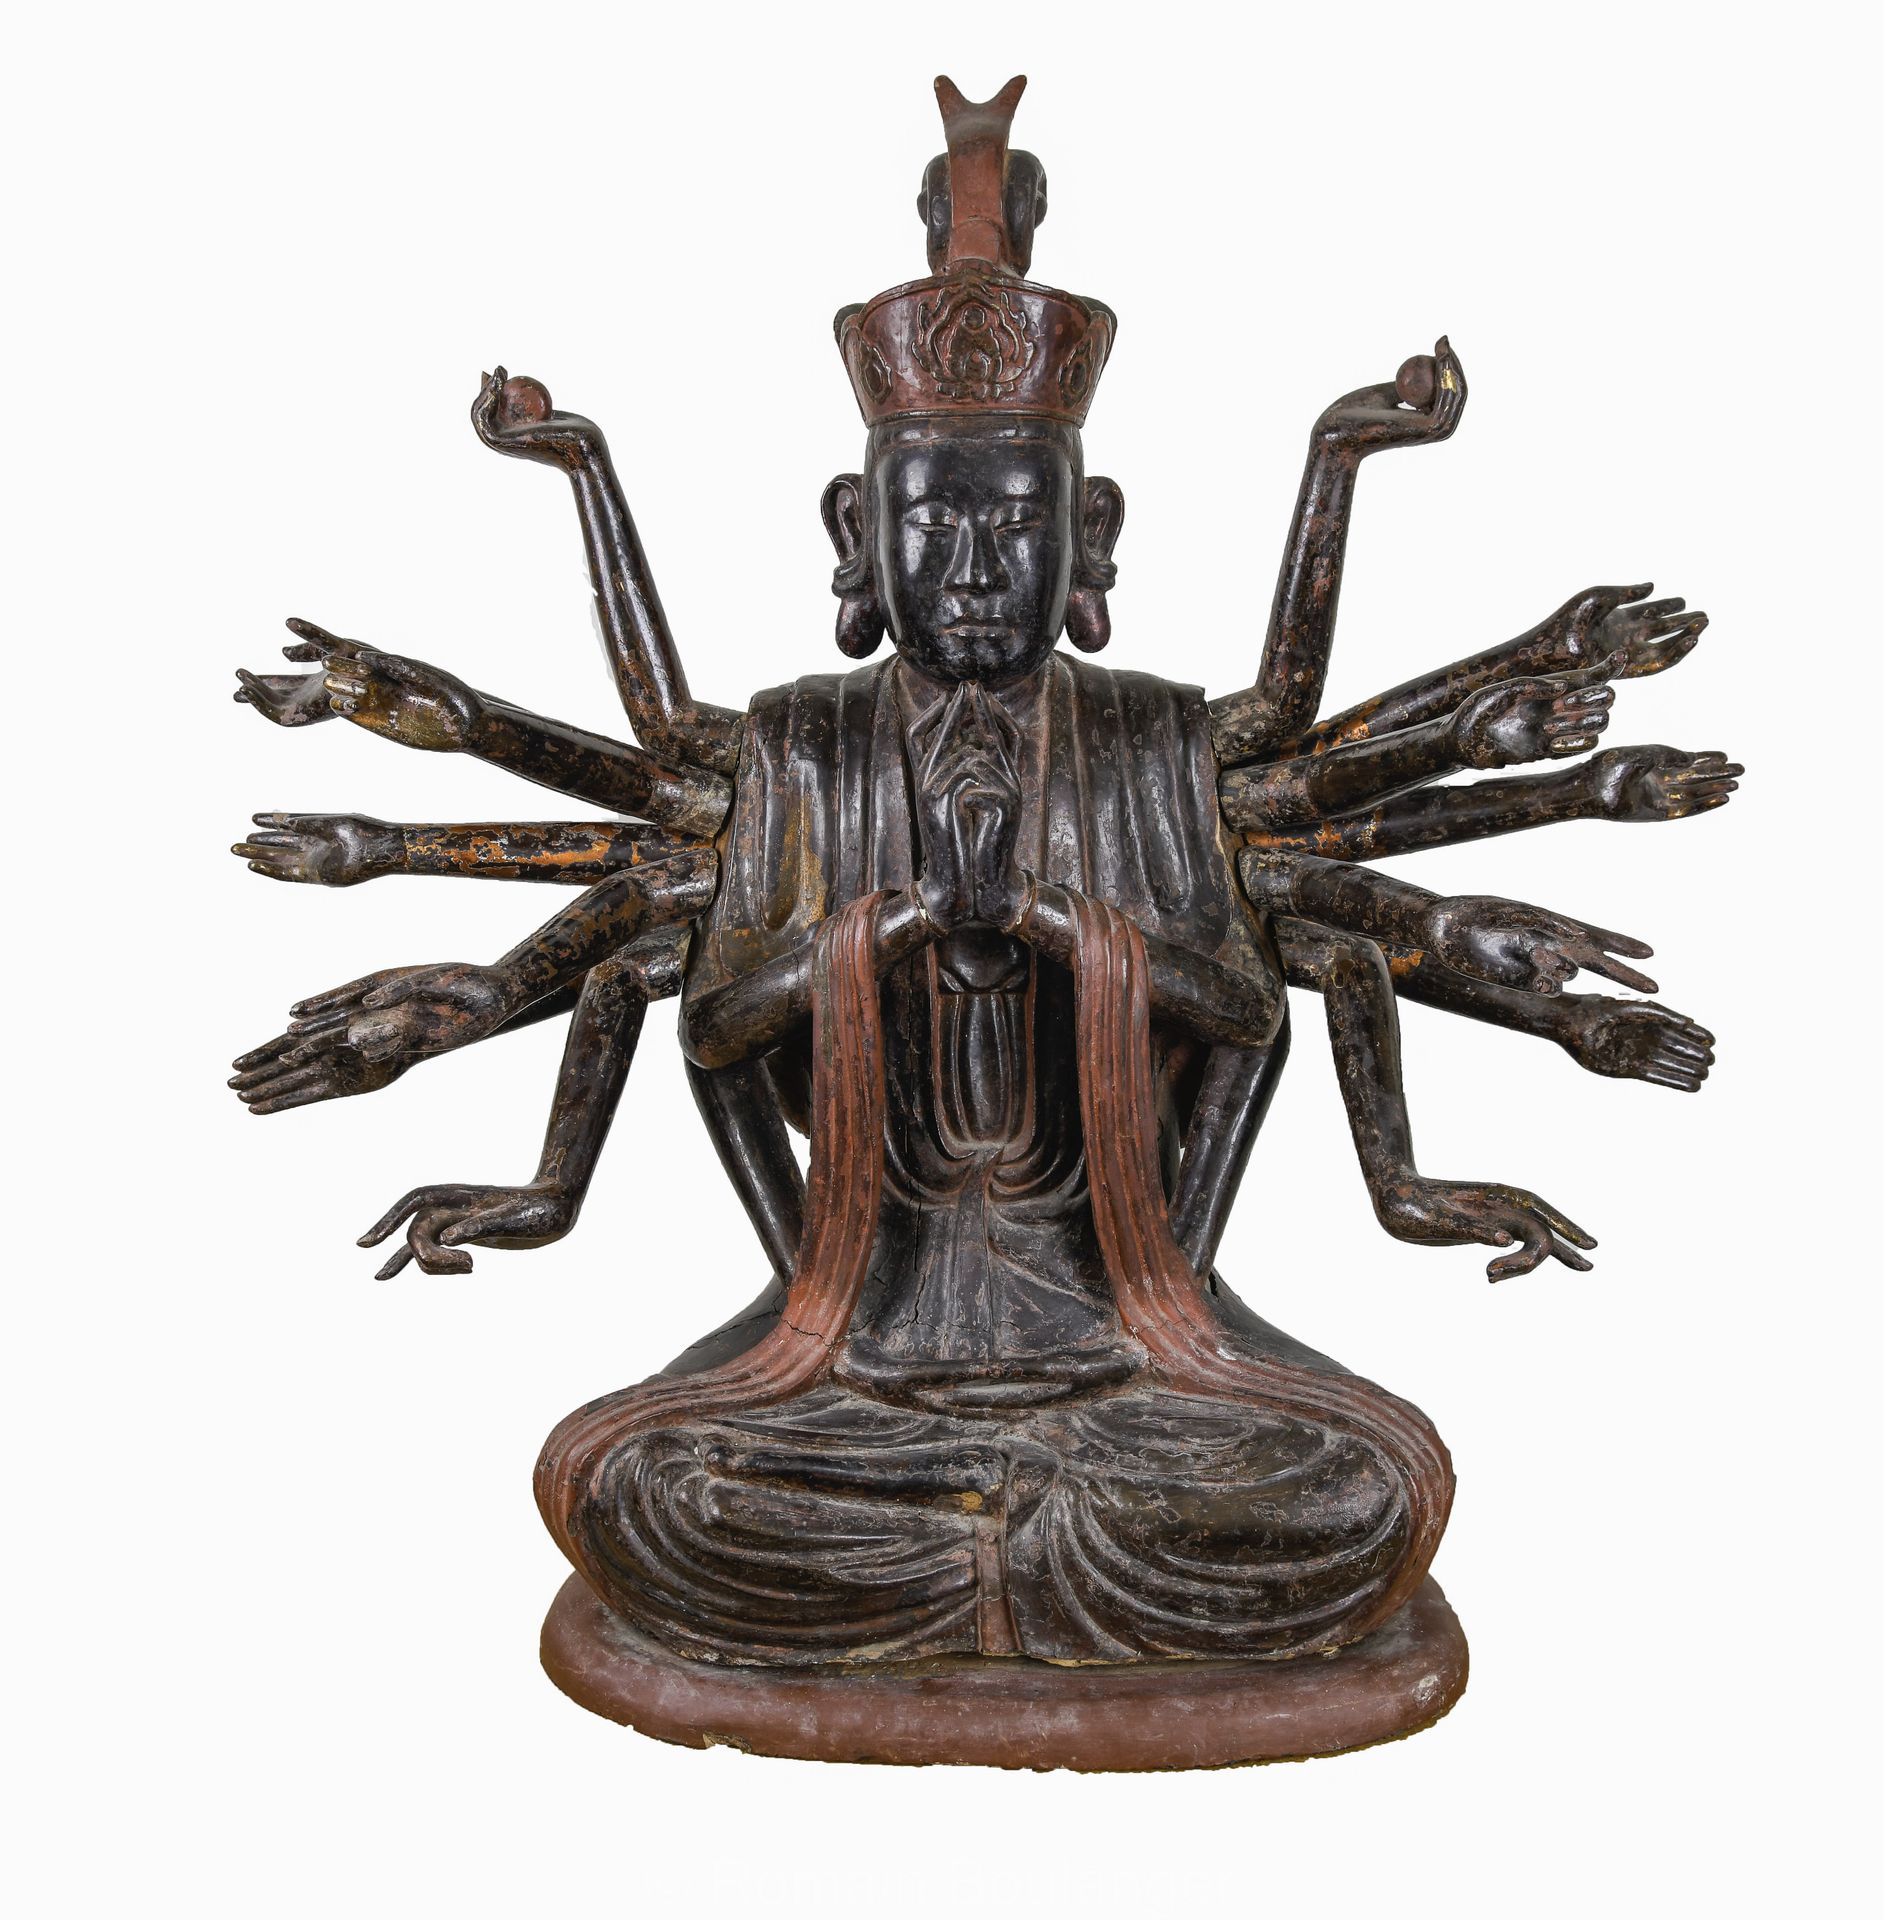 Null Statua in legno laccato di Avalokitesvara
Vietnam, XVIII-XIX secolo
Raffigu&hellip;